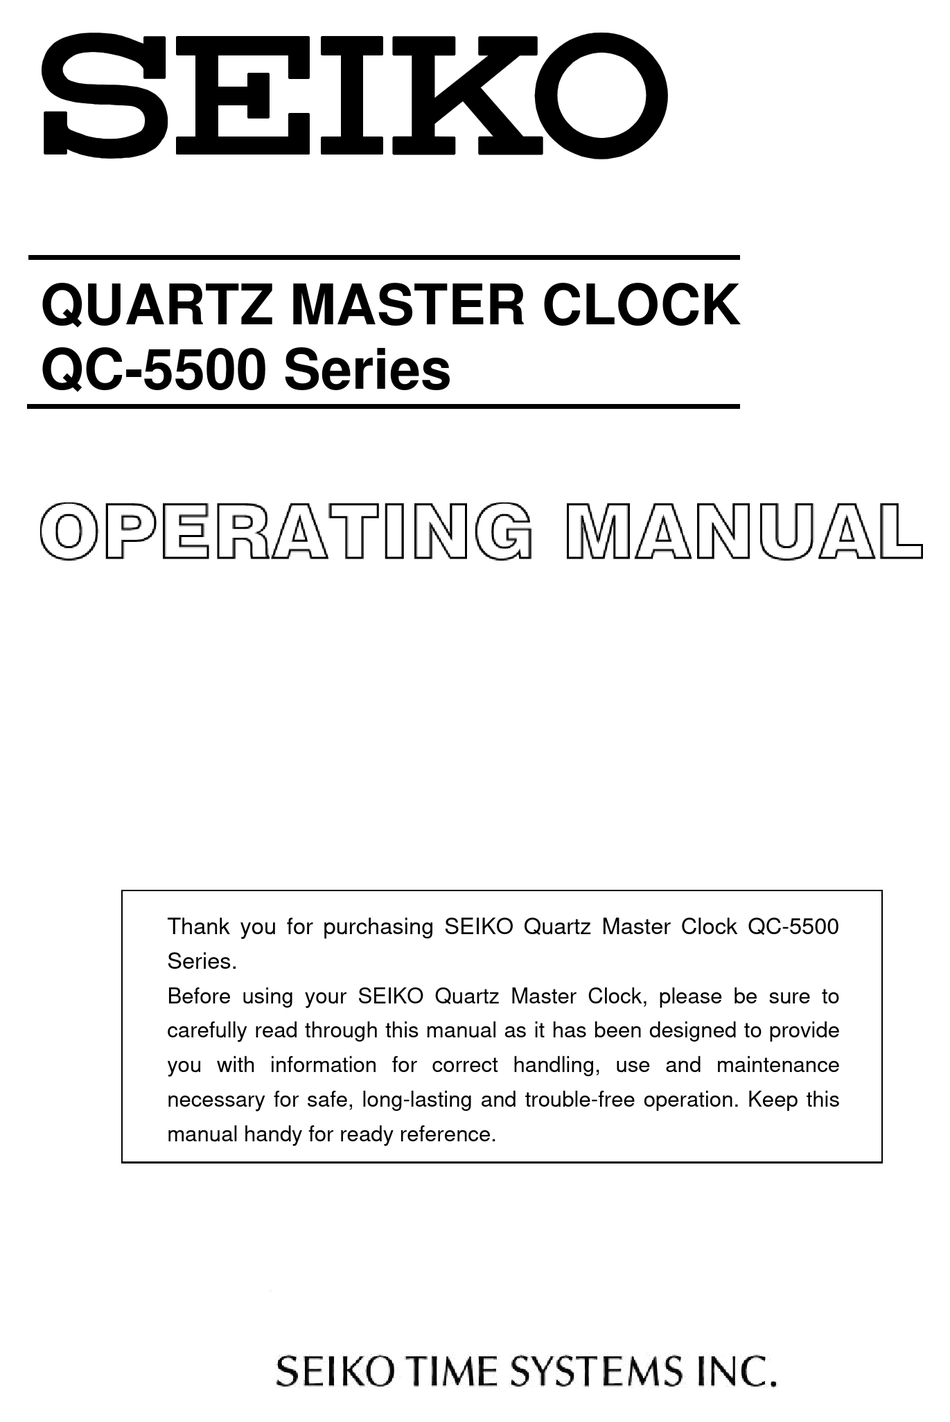 SEIKO QC-5500 SERIES OPERATING MANUAL Pdf Download | ManualsLib